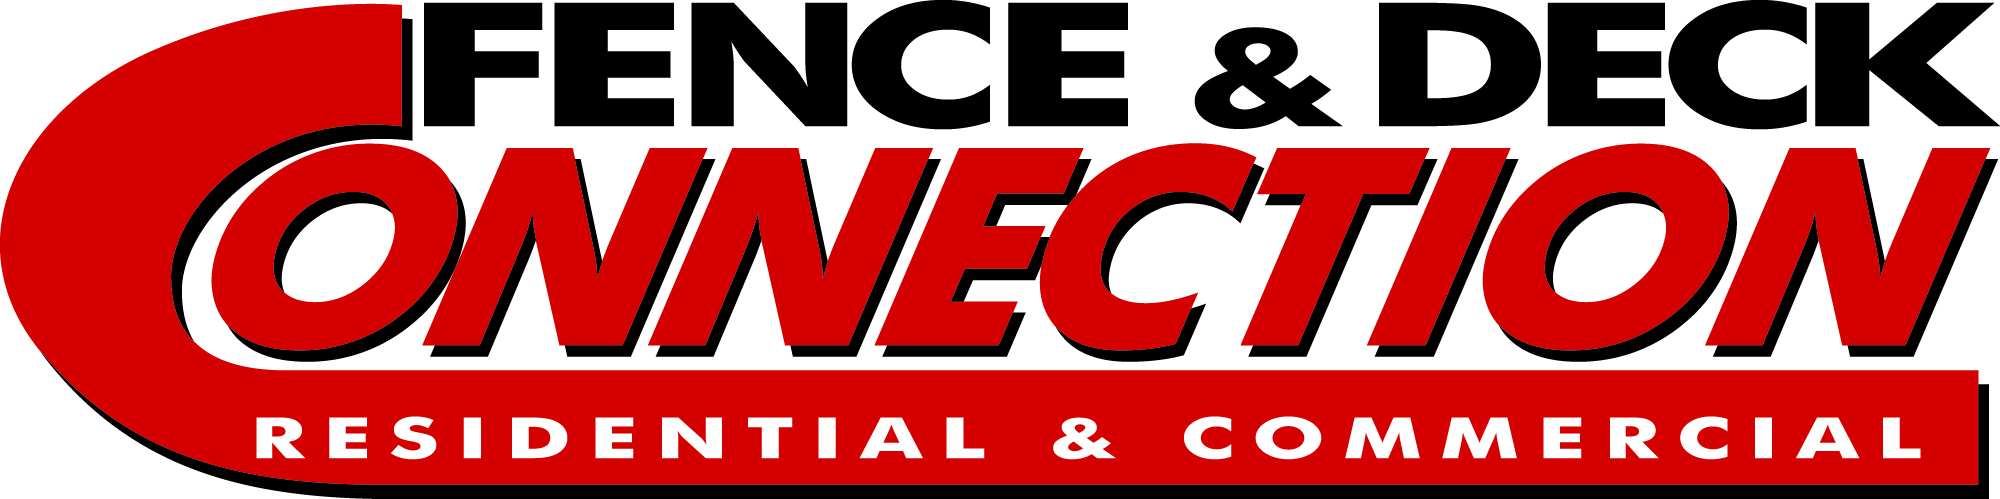 Fence & Deck Connection, Inc. Logo